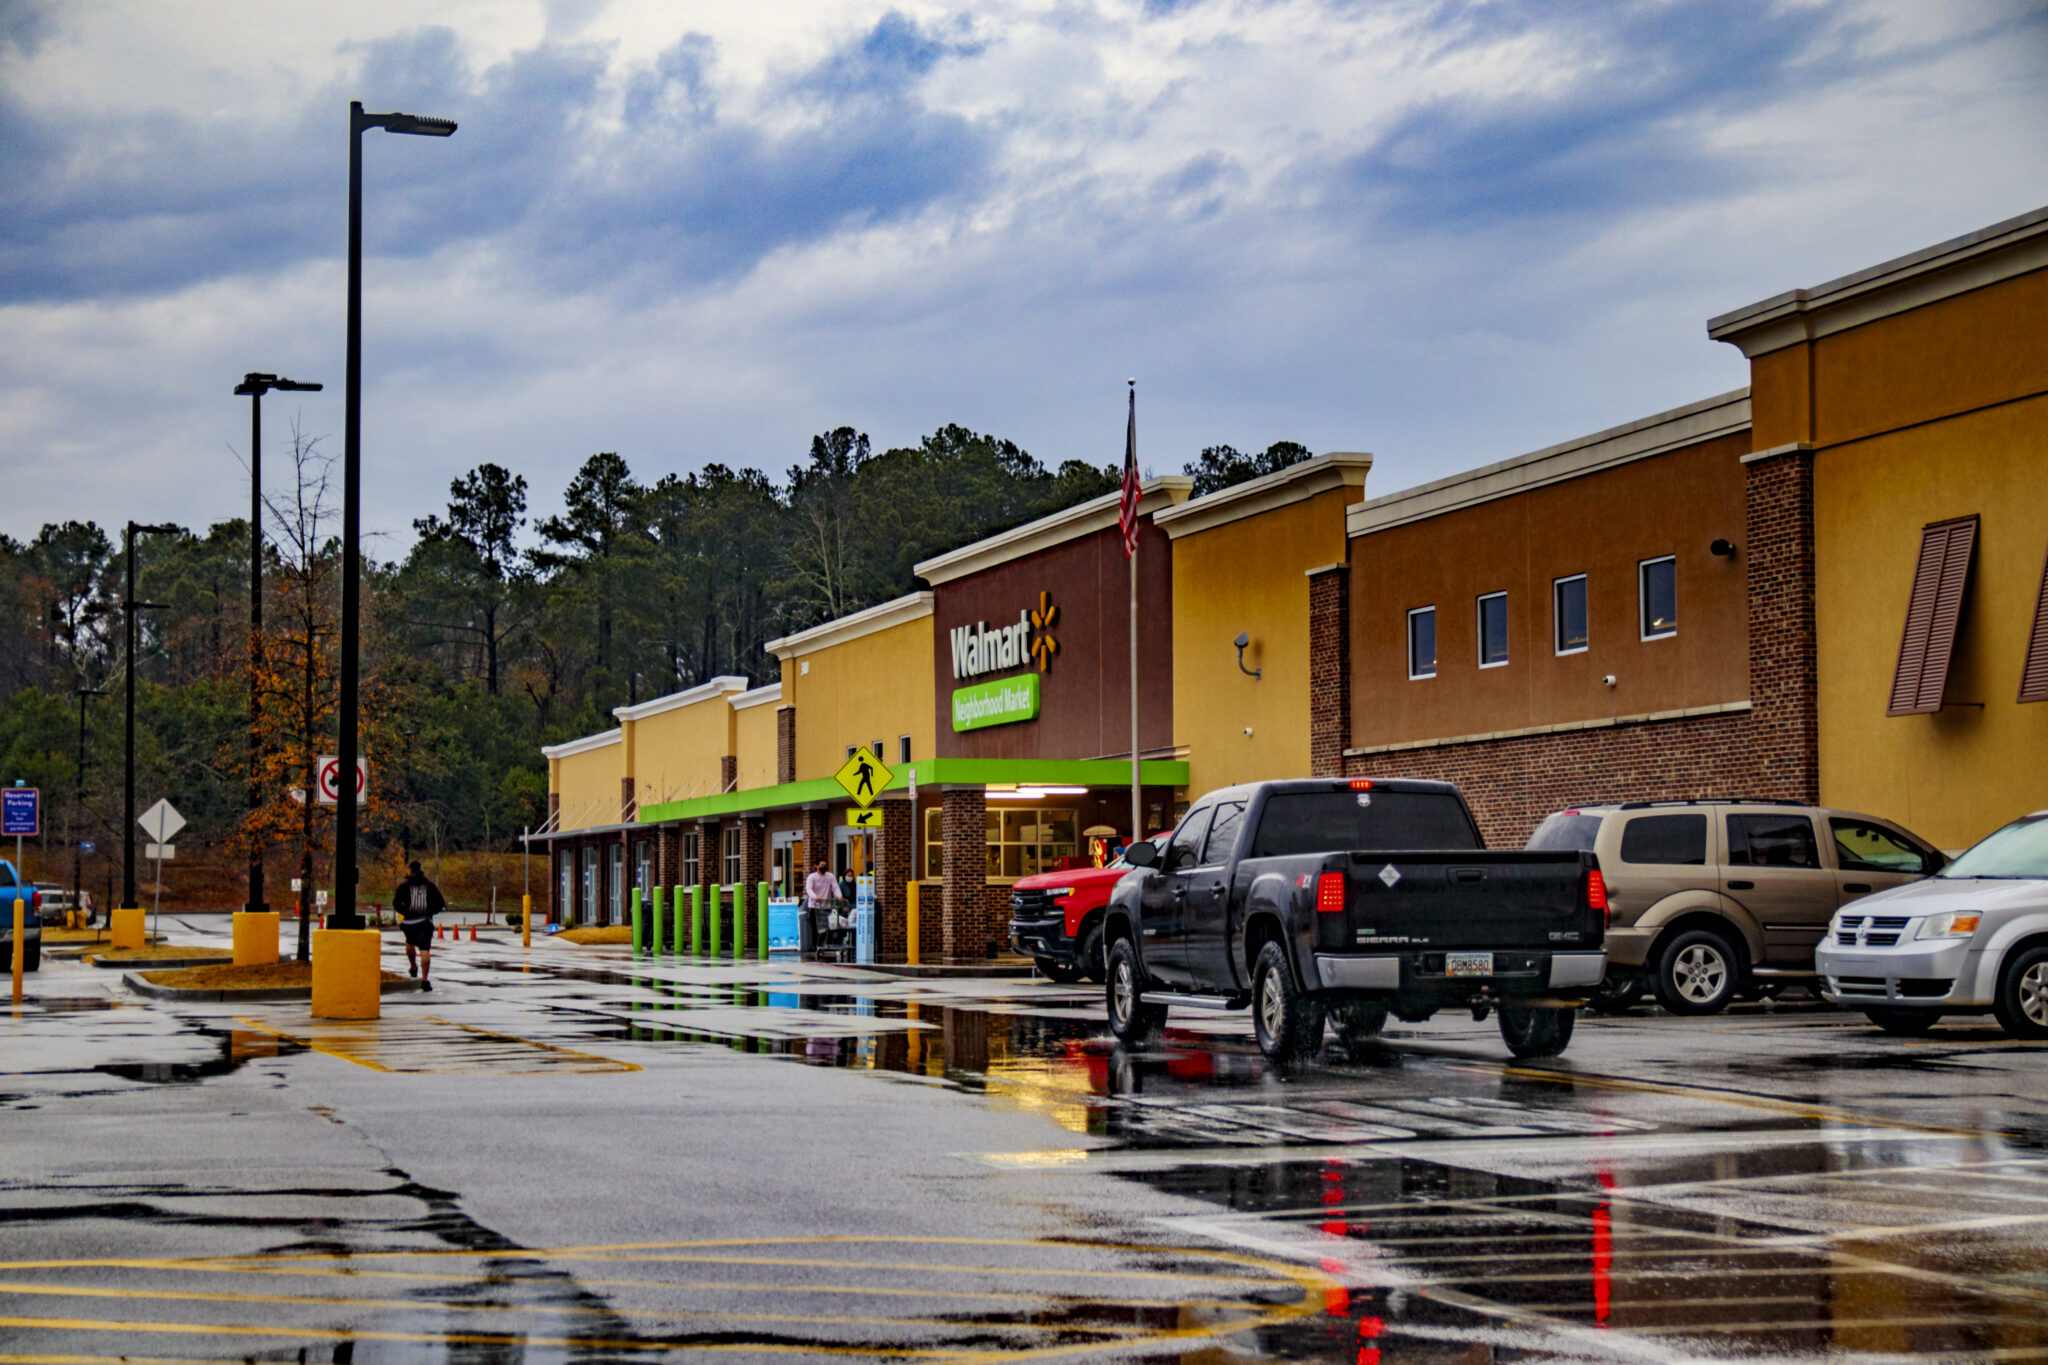 Augusta, Ga USA - 01 01 21: Walmart neighborhood grocery store in the rain with traffic and people